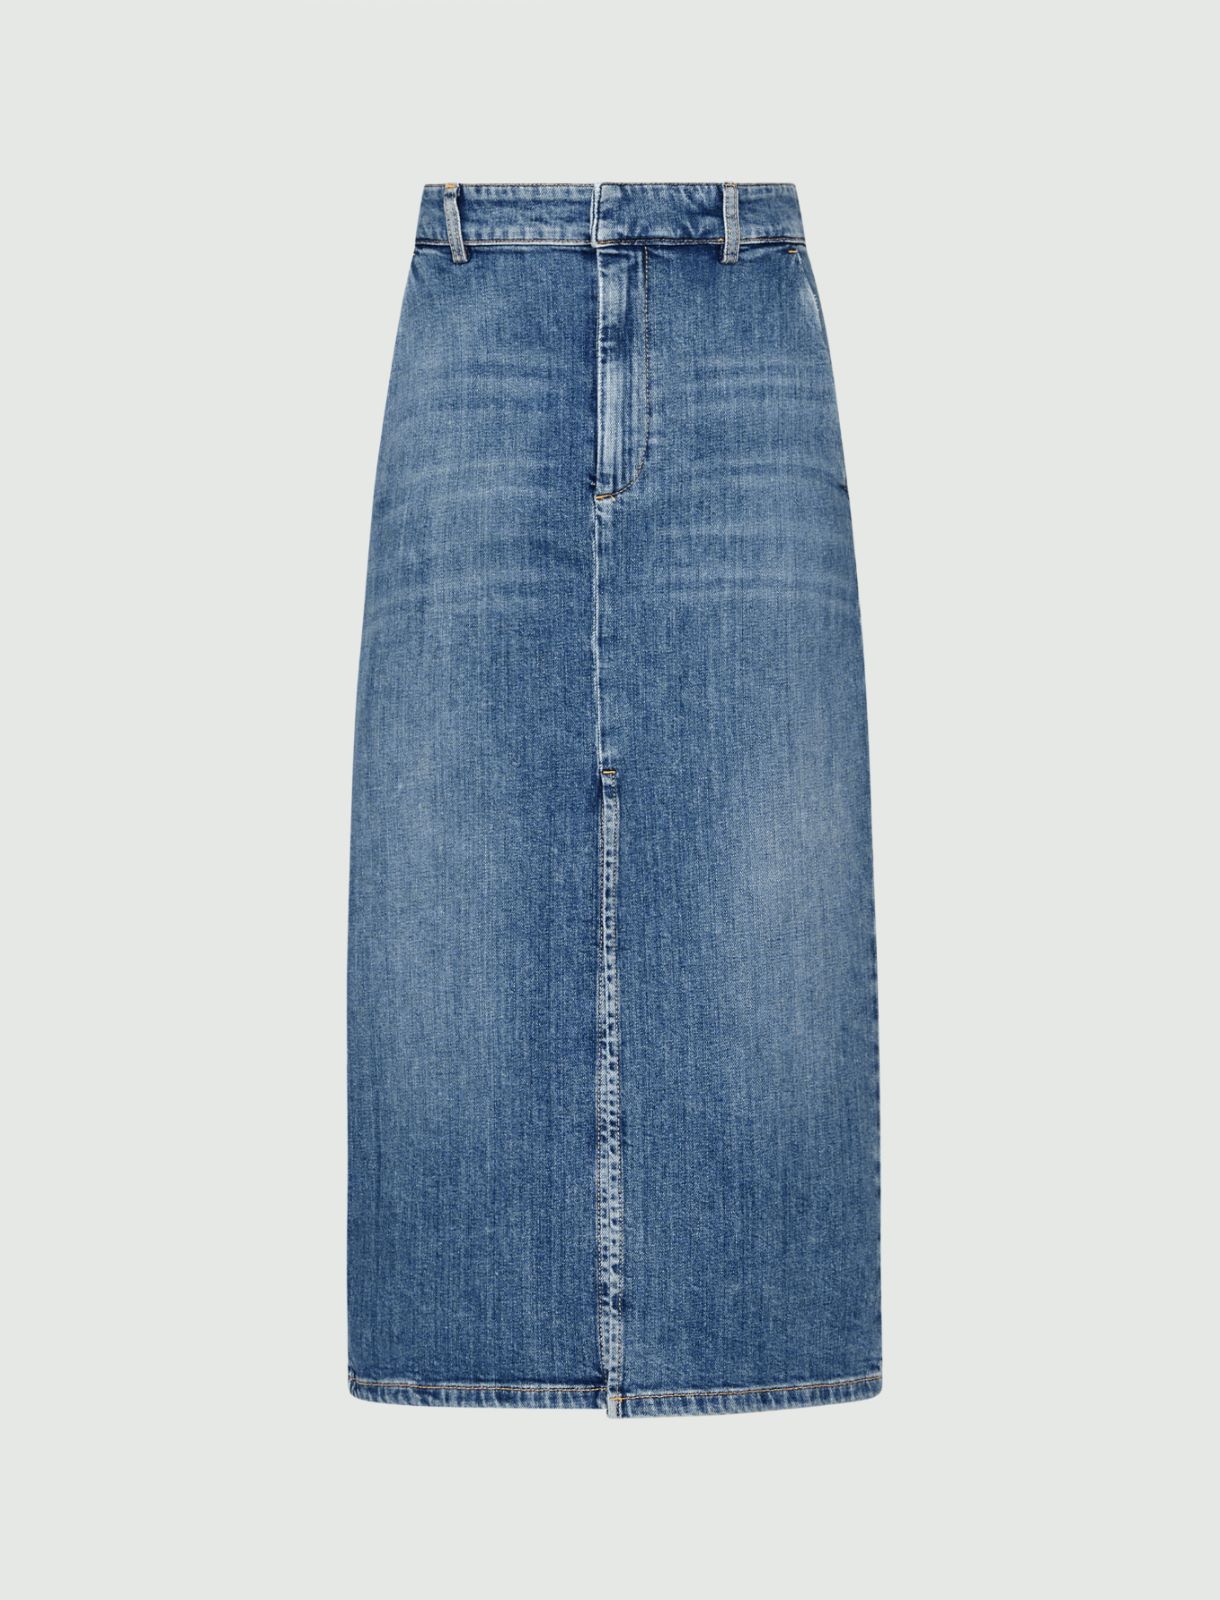 Denim skirt - Blue jeans - Marella - 2